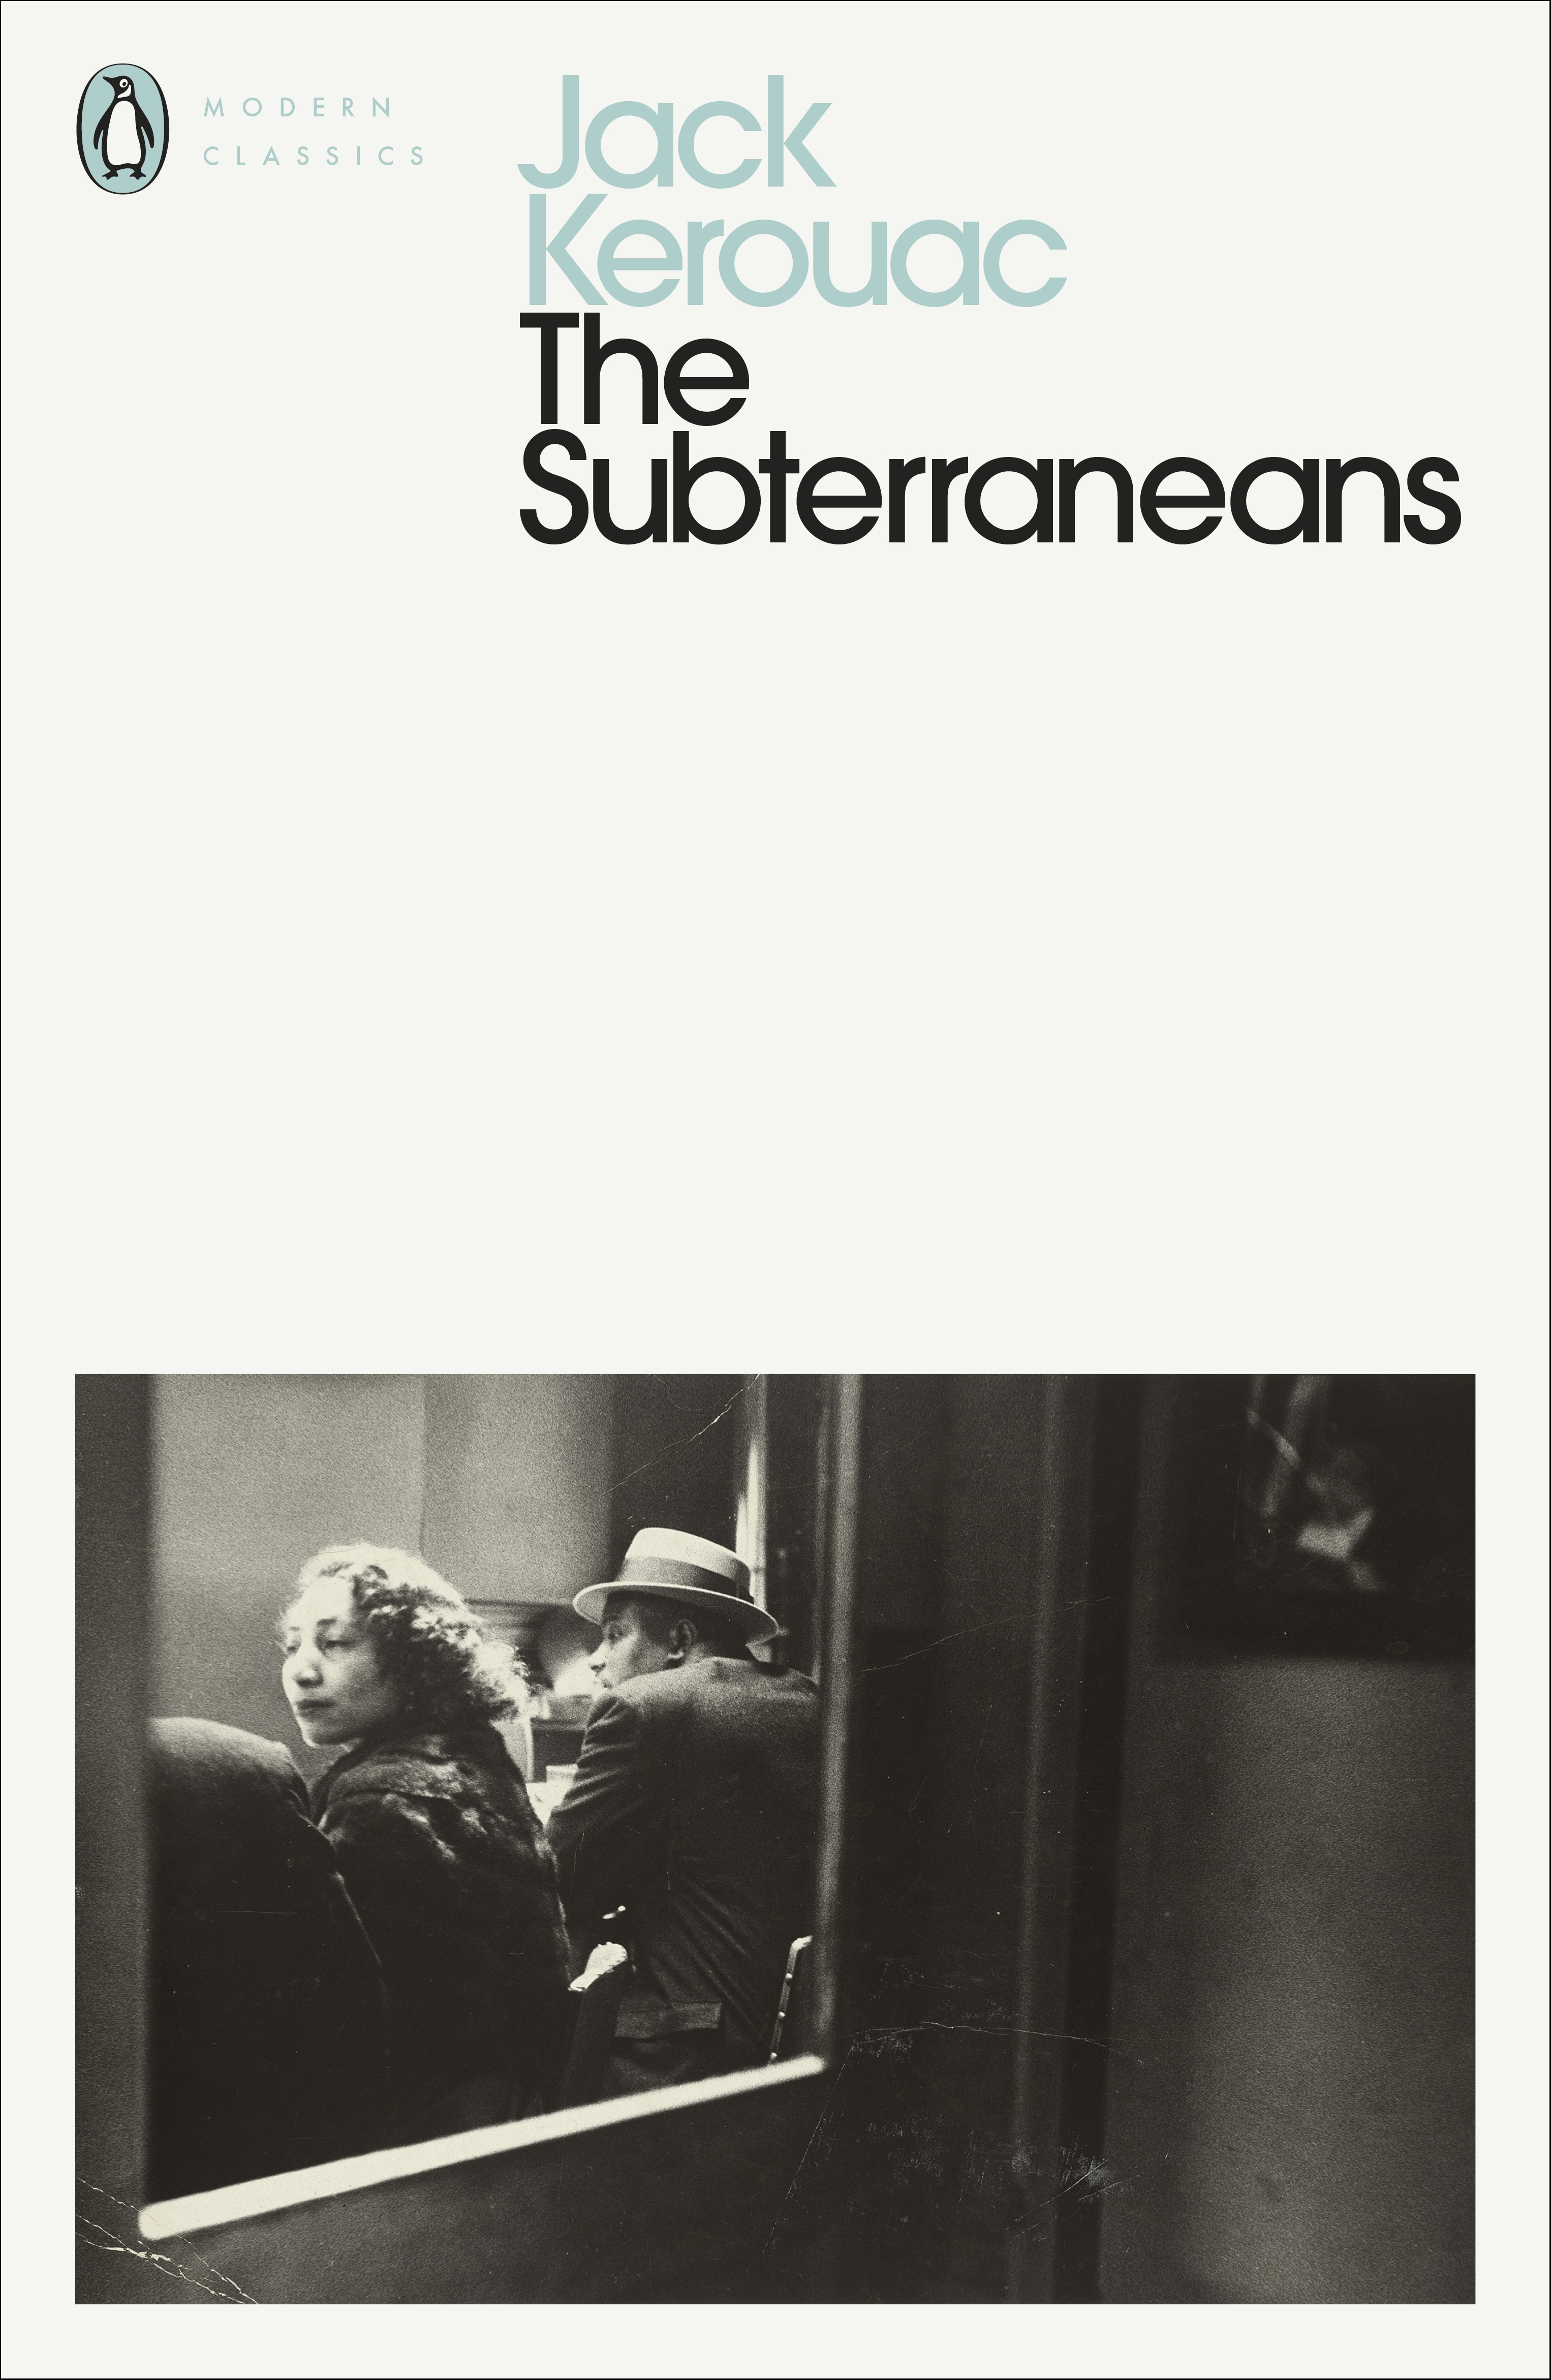 Book “The Subterraneans” by Jack Kerouac, Ann Douglas — March 1, 2001